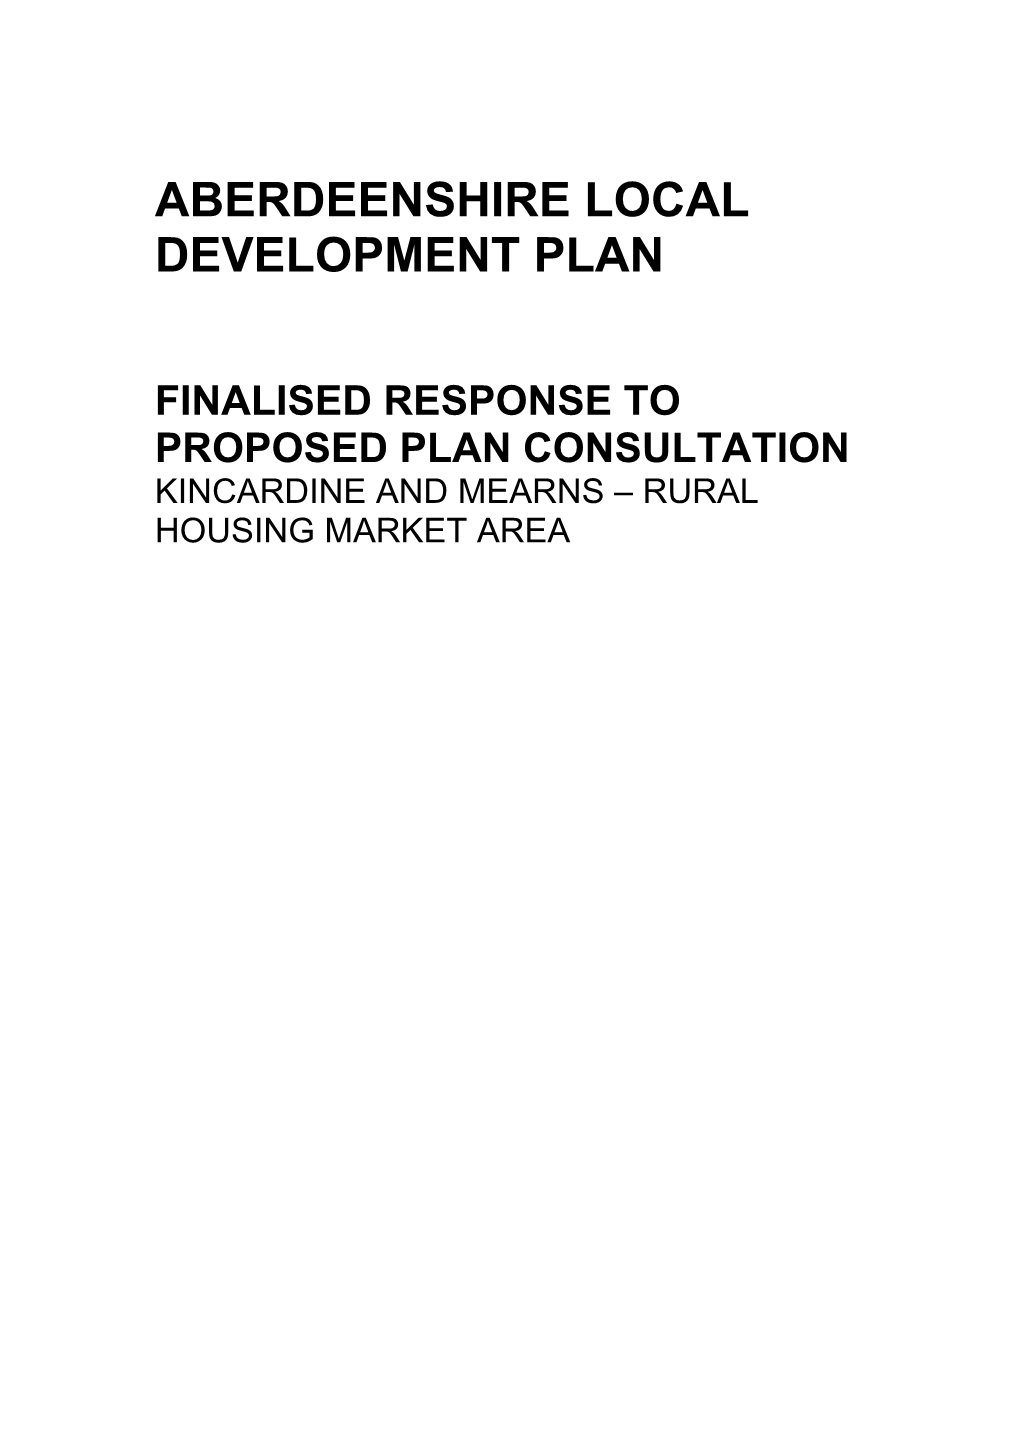 Aberdeenshire Local Development Plan